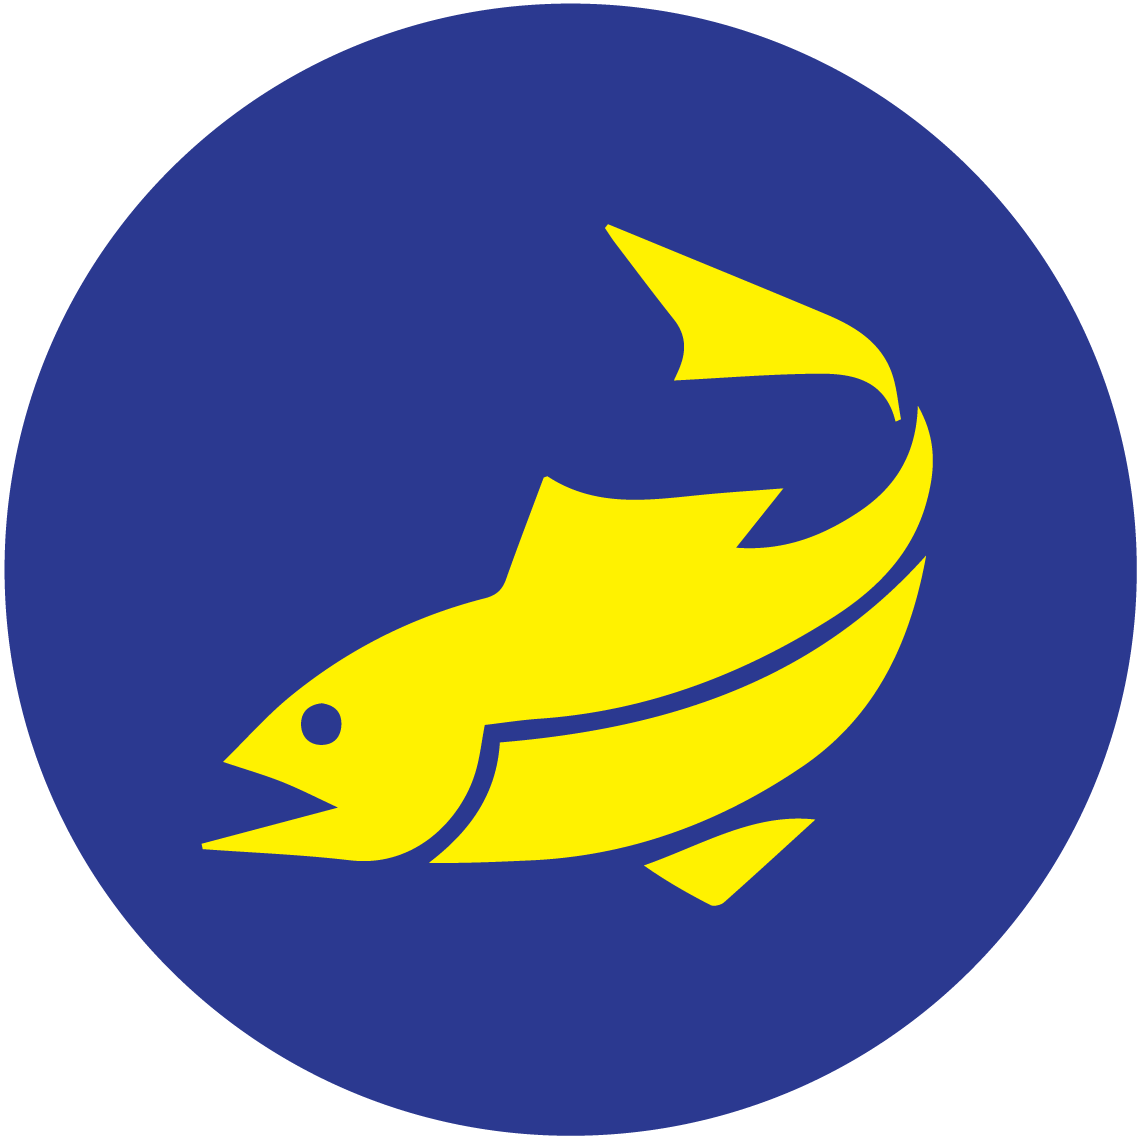 Ocean Fisheries Ltd